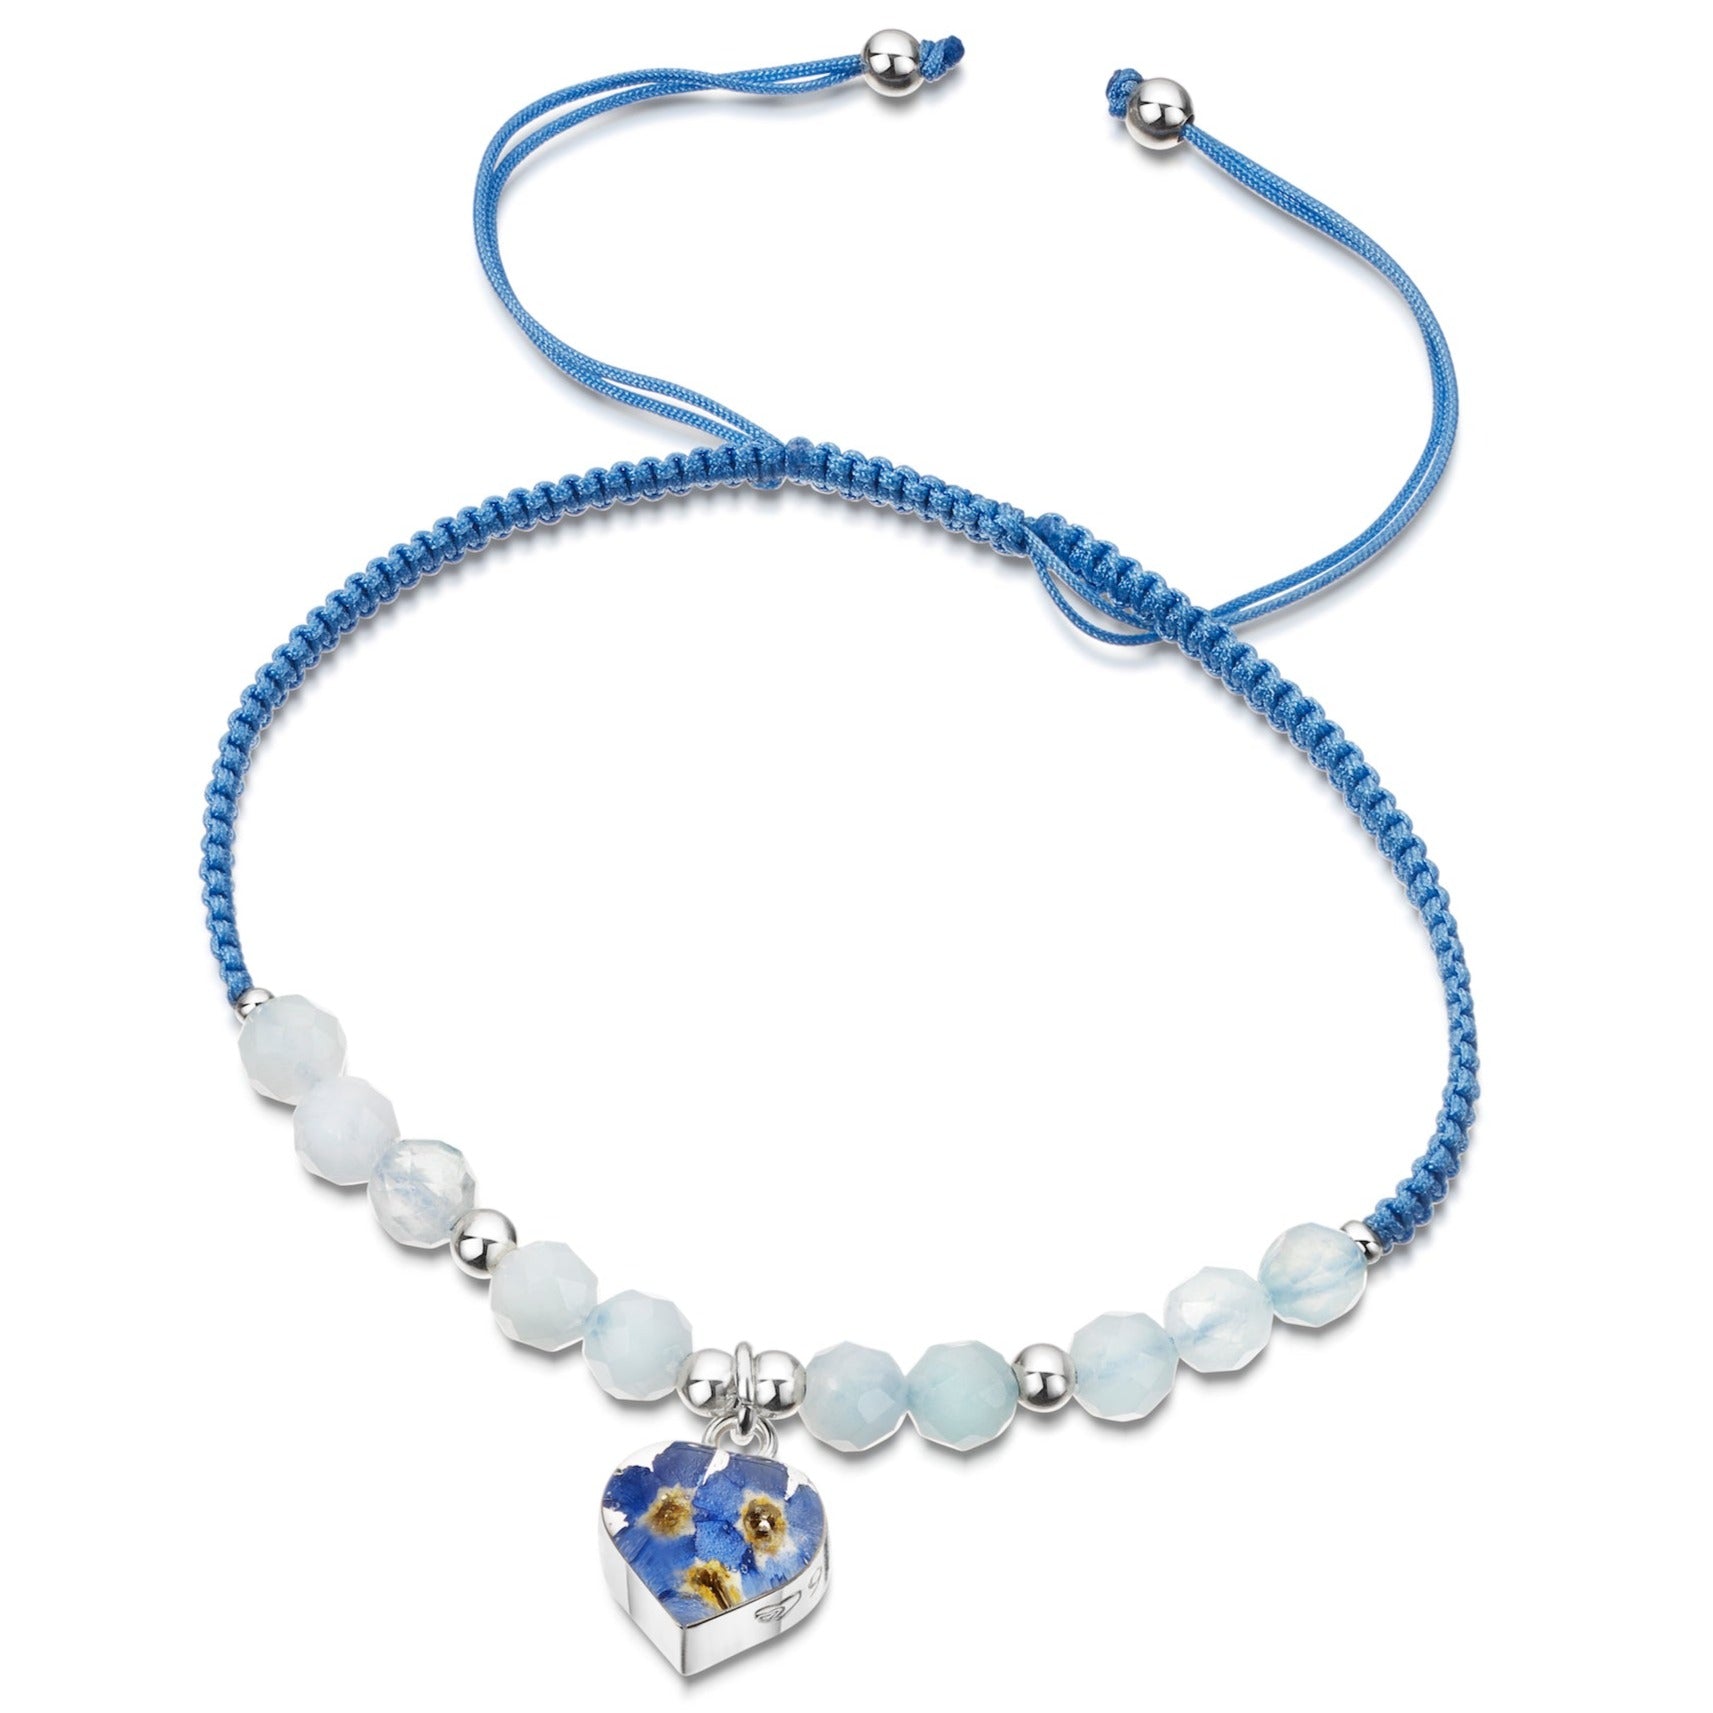 Forget-me-not heart gemstone bracelet